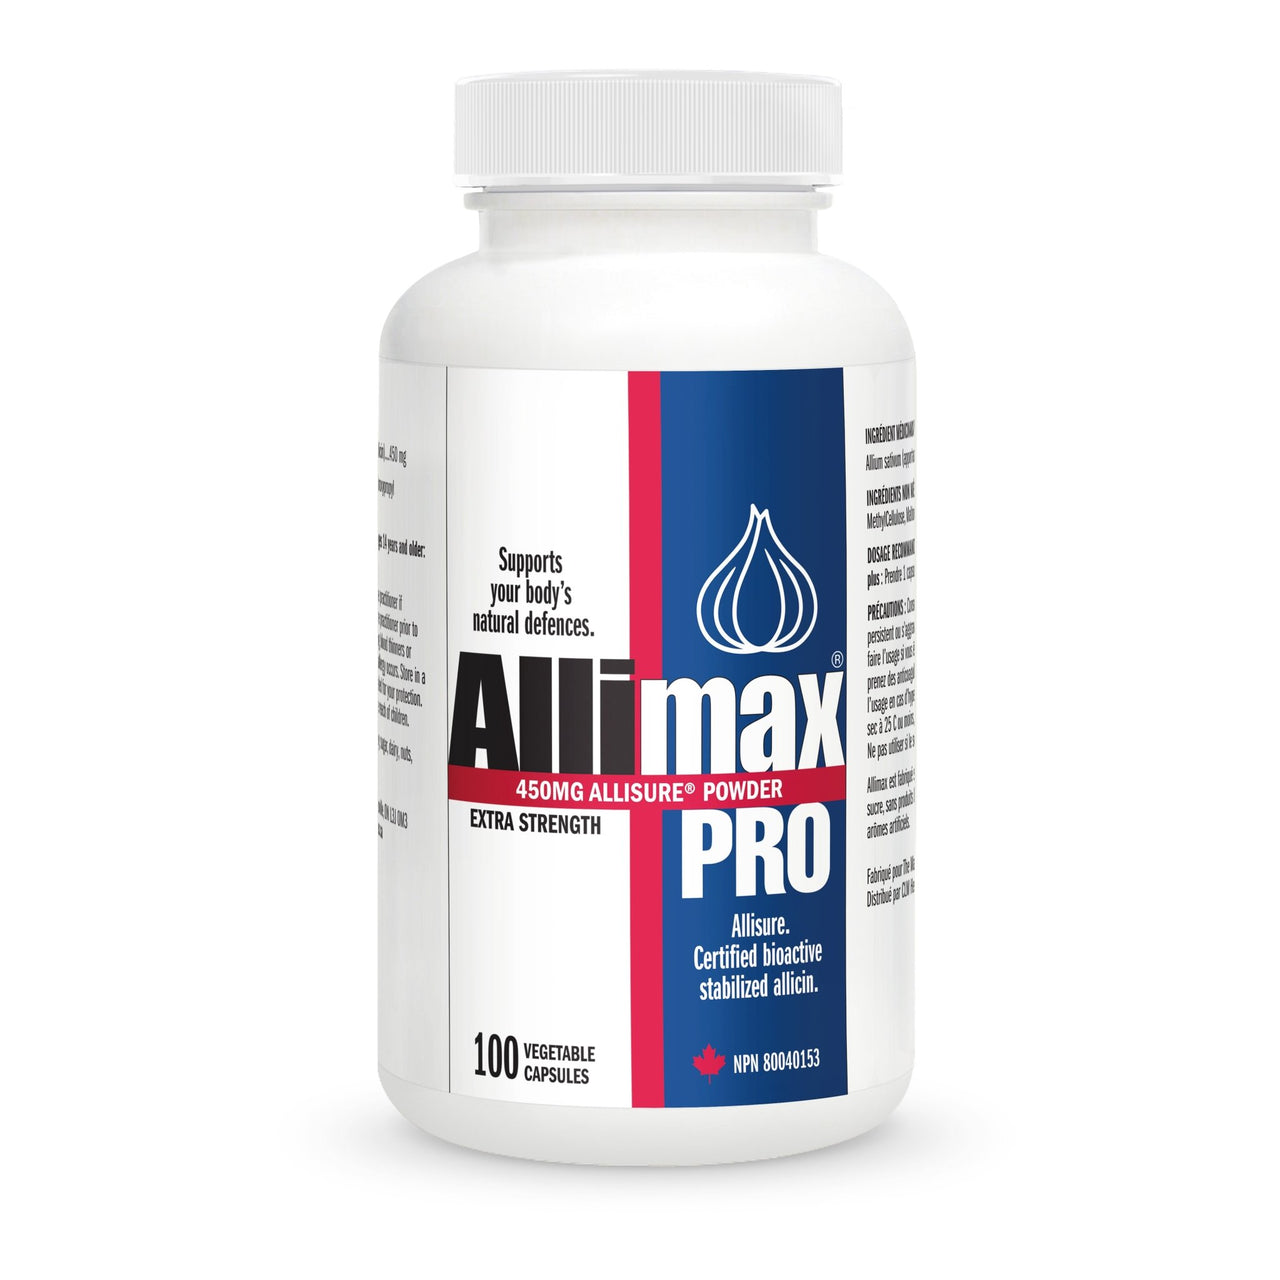 Allimax Pro 450 mg Allisure Powder 100 Veg Capsules - Nutrition Plus